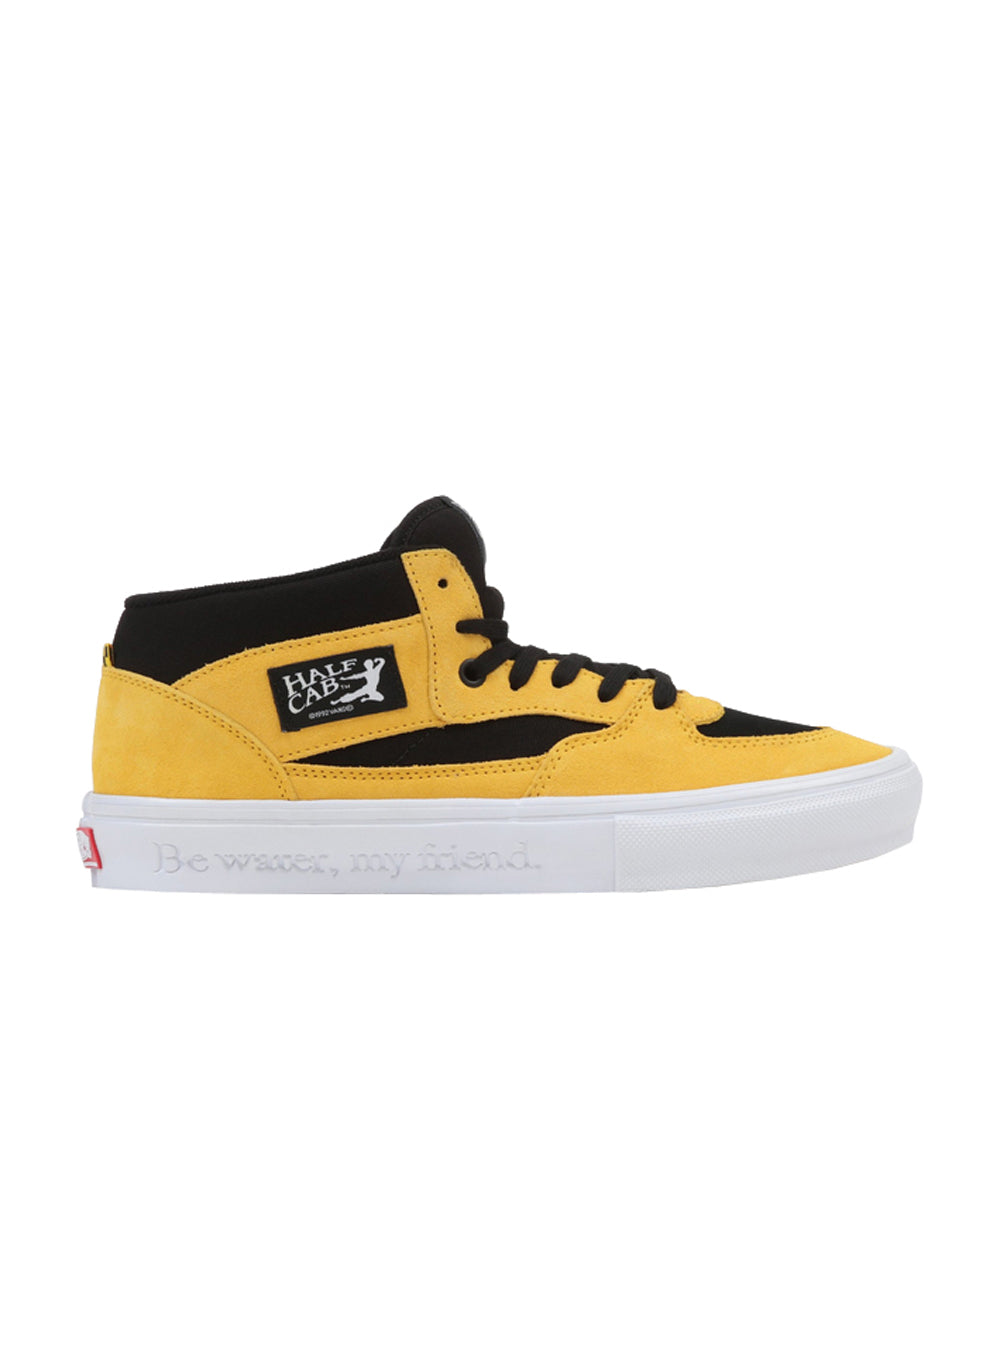 Vans Skate Half Cab Bruce Lee Black/Yellow 10.5